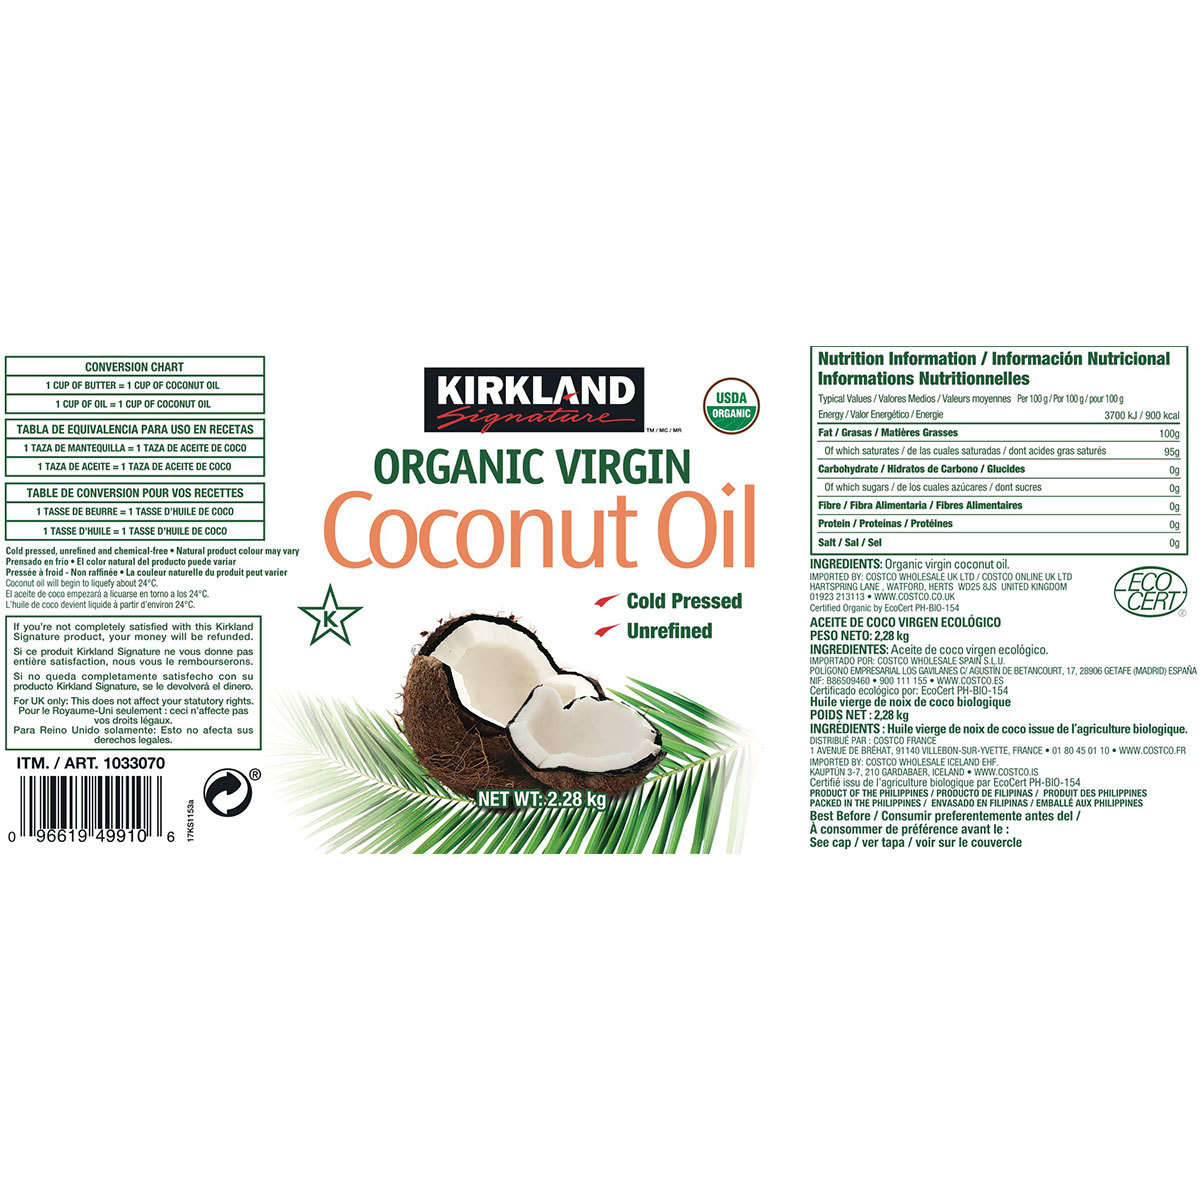 Kirkland Signature Organic Virgin Coconut Oil, 2.28kg